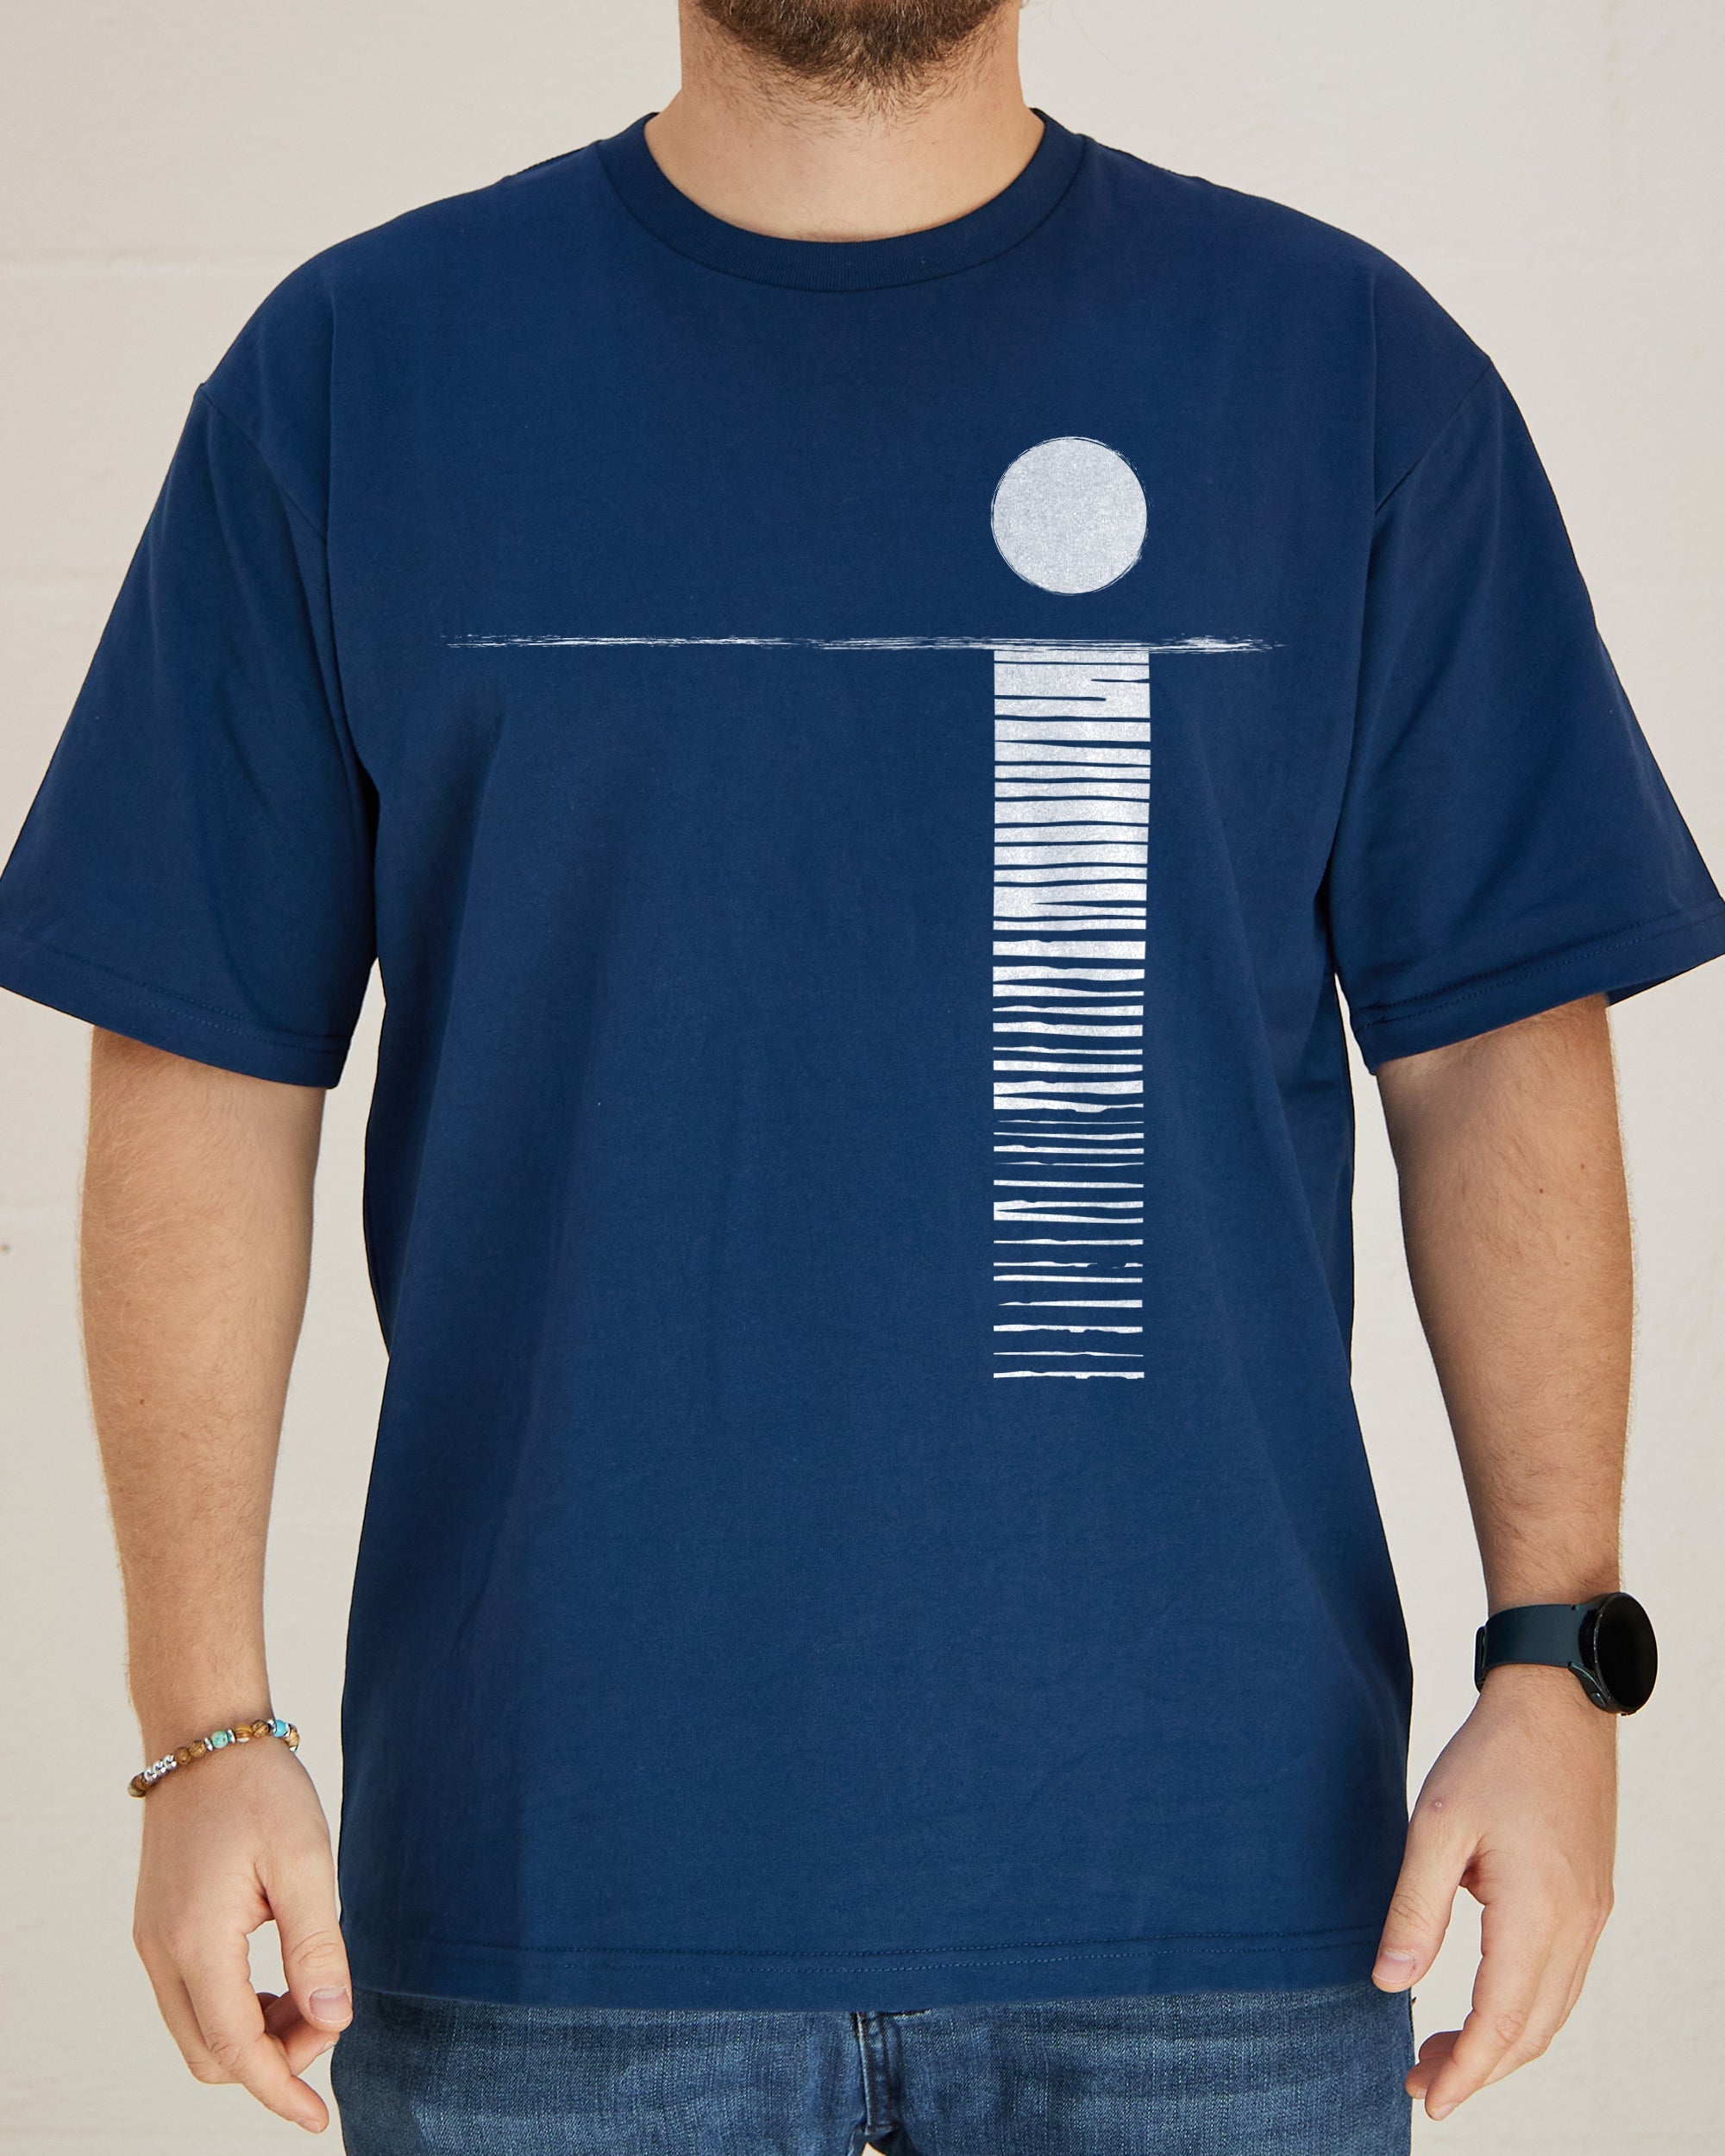 Moonlight Sun T-Shirt Australia Online Navy